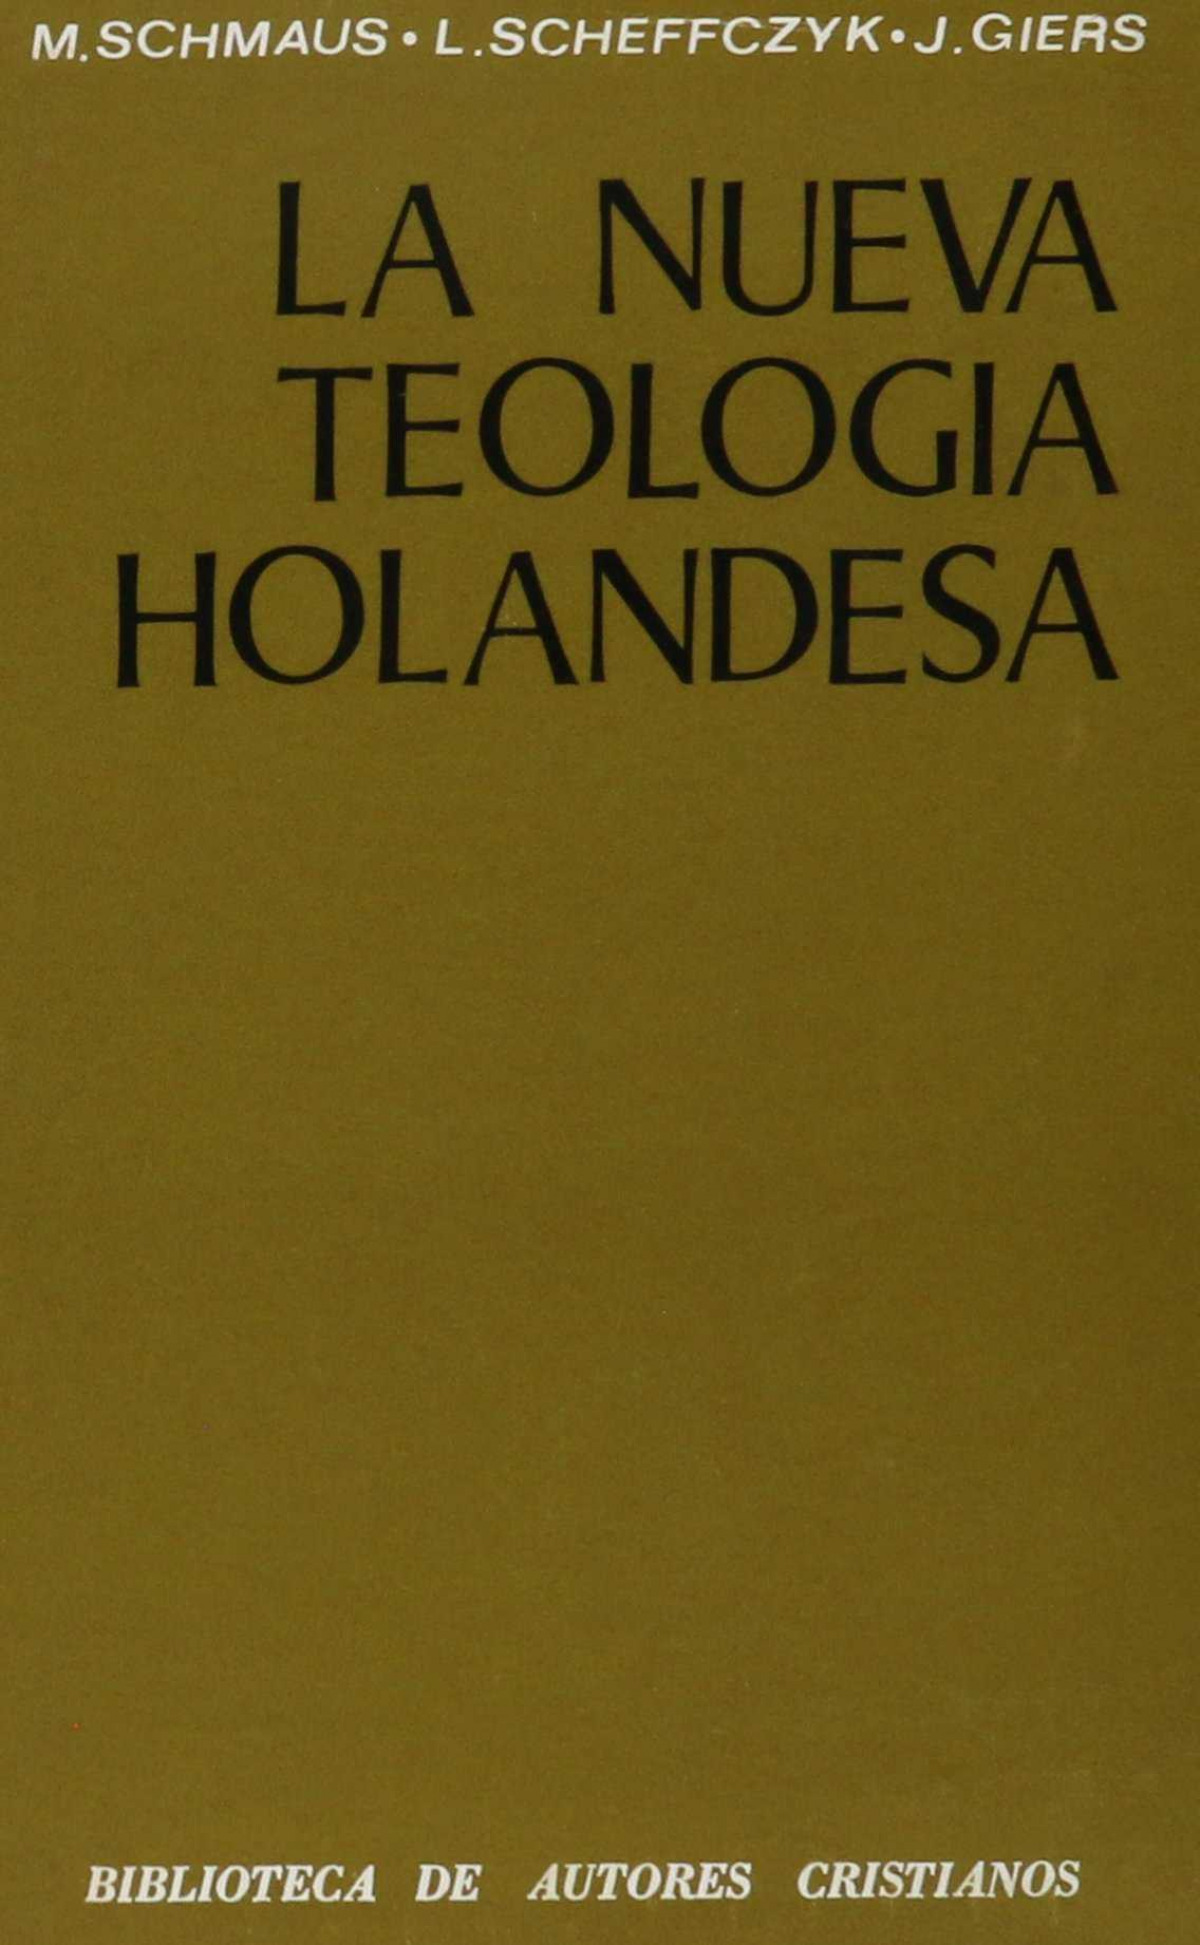 La nueva teologia holandesa - Schmaus, Michael / Scheffczyk, Leo / Gie